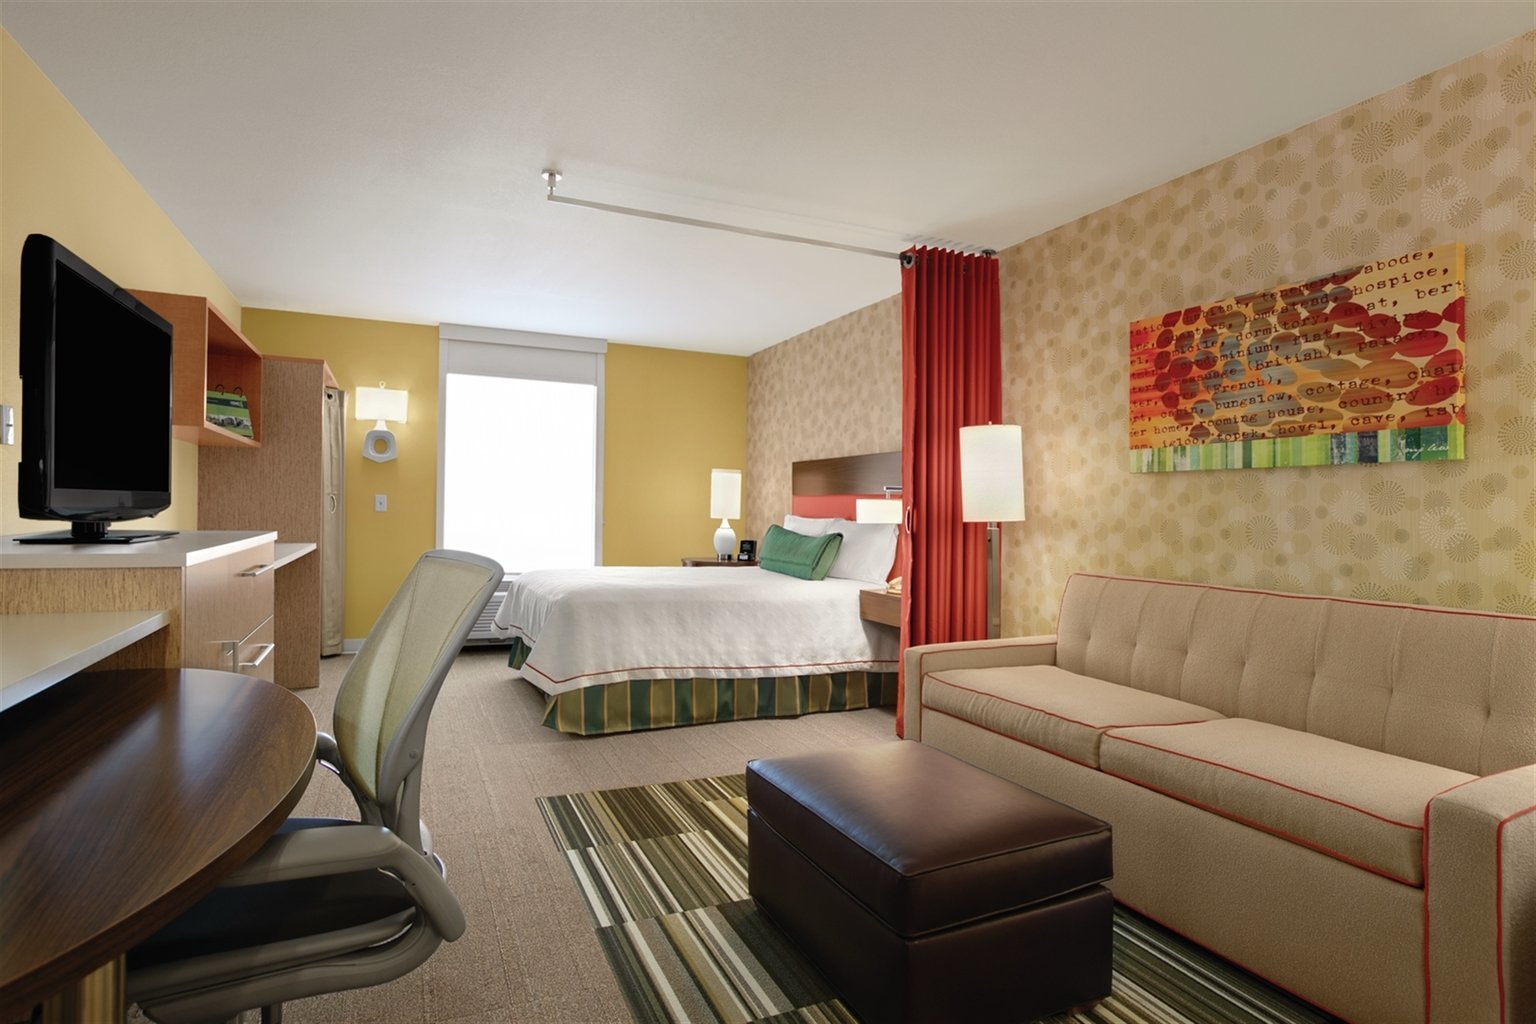 Photo of Home2 Suites by Hilton Atlanta Norcross, Norcross, GA